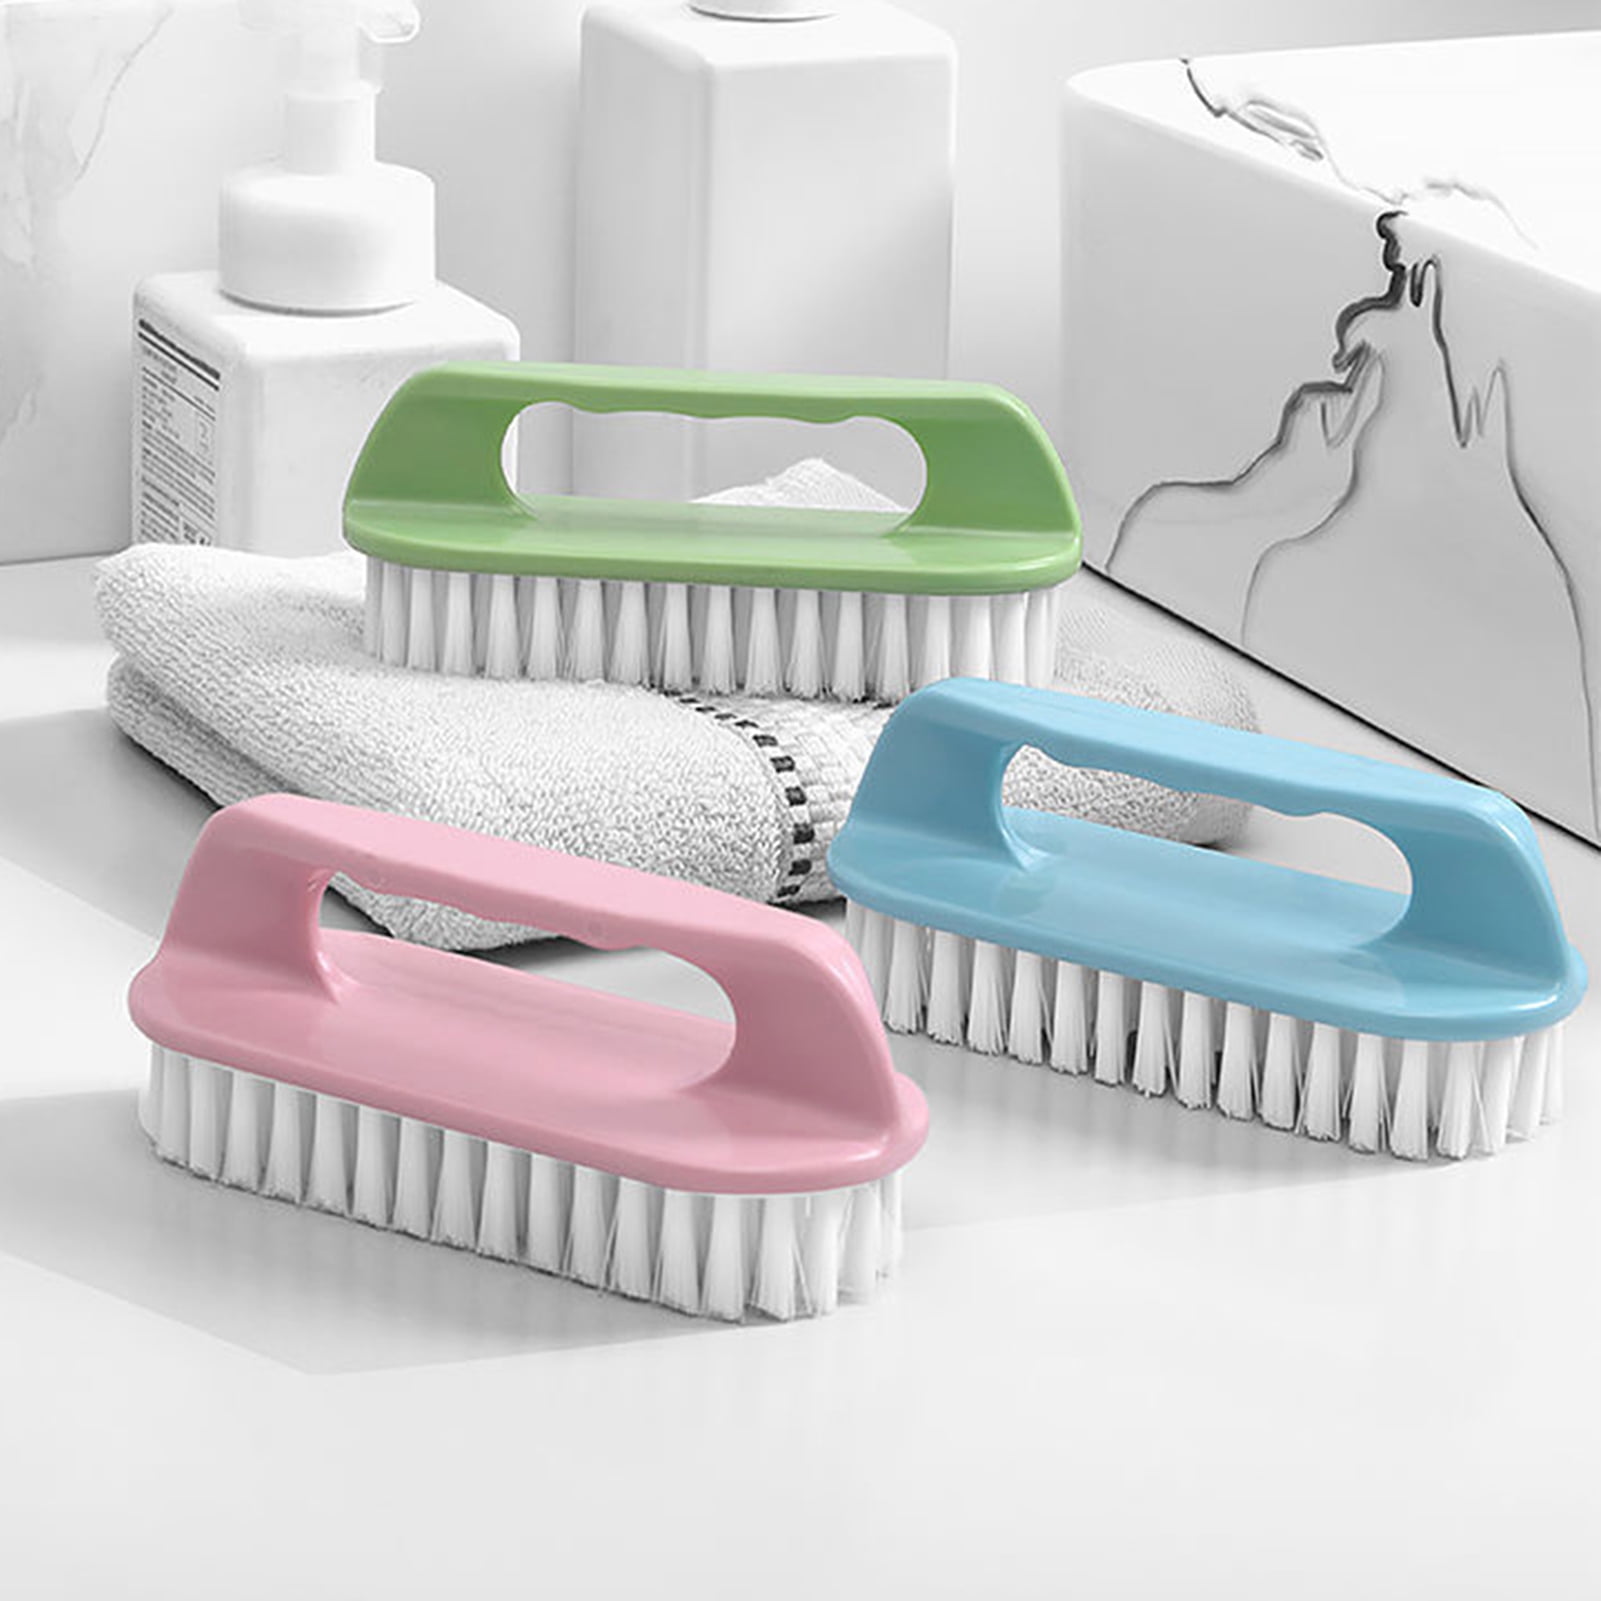 Travelwnat Scrub Brush, Household Laundry Cloth Shoe Cleaning Brushes with Non-Slip Design, Quality Durable Cleaning Washing Brush, Blue